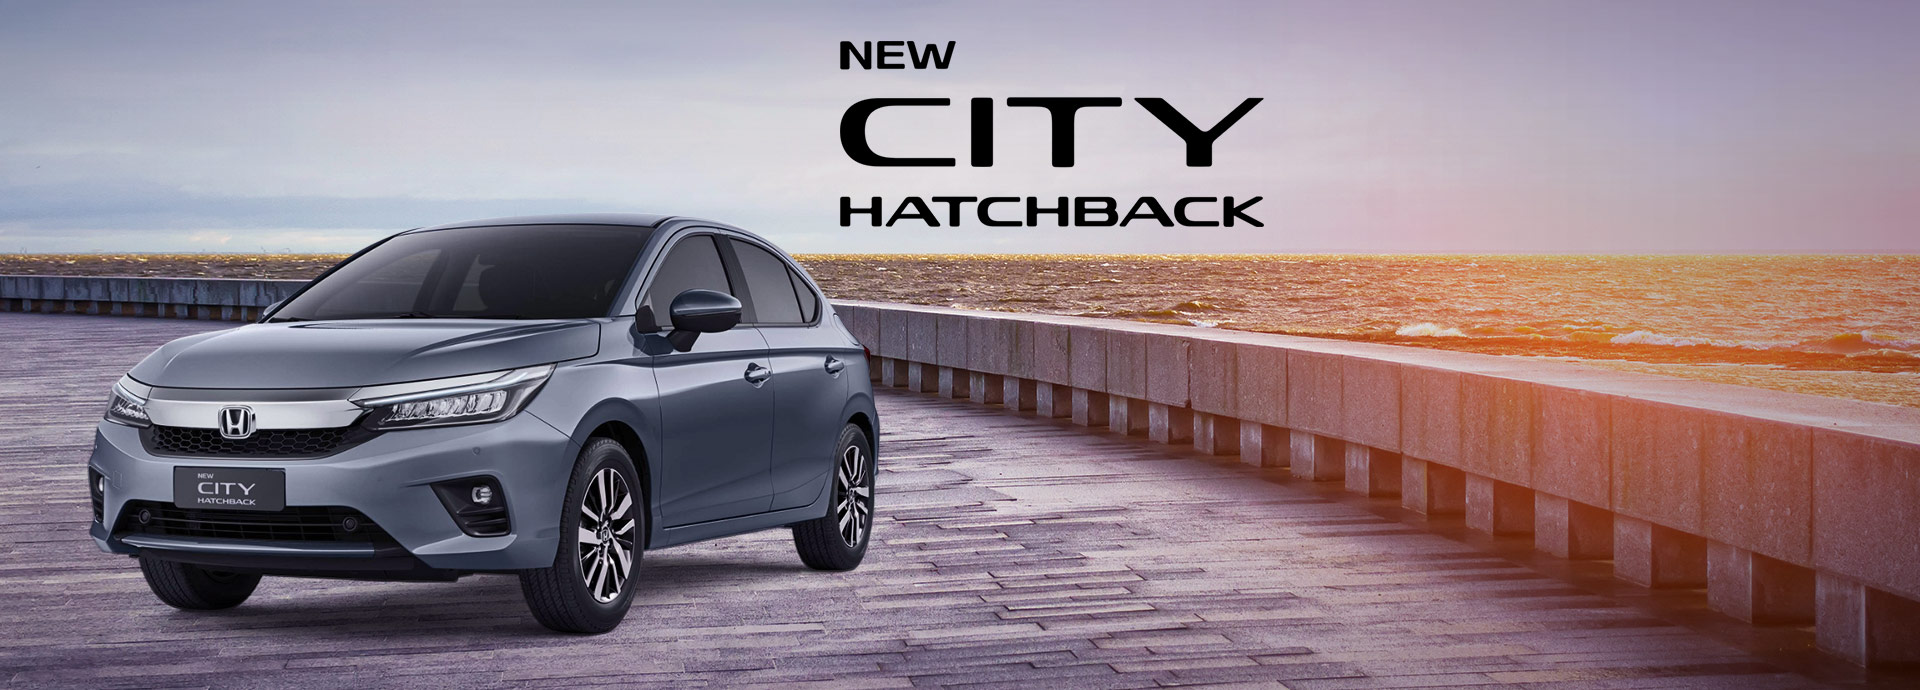 new city hatchback